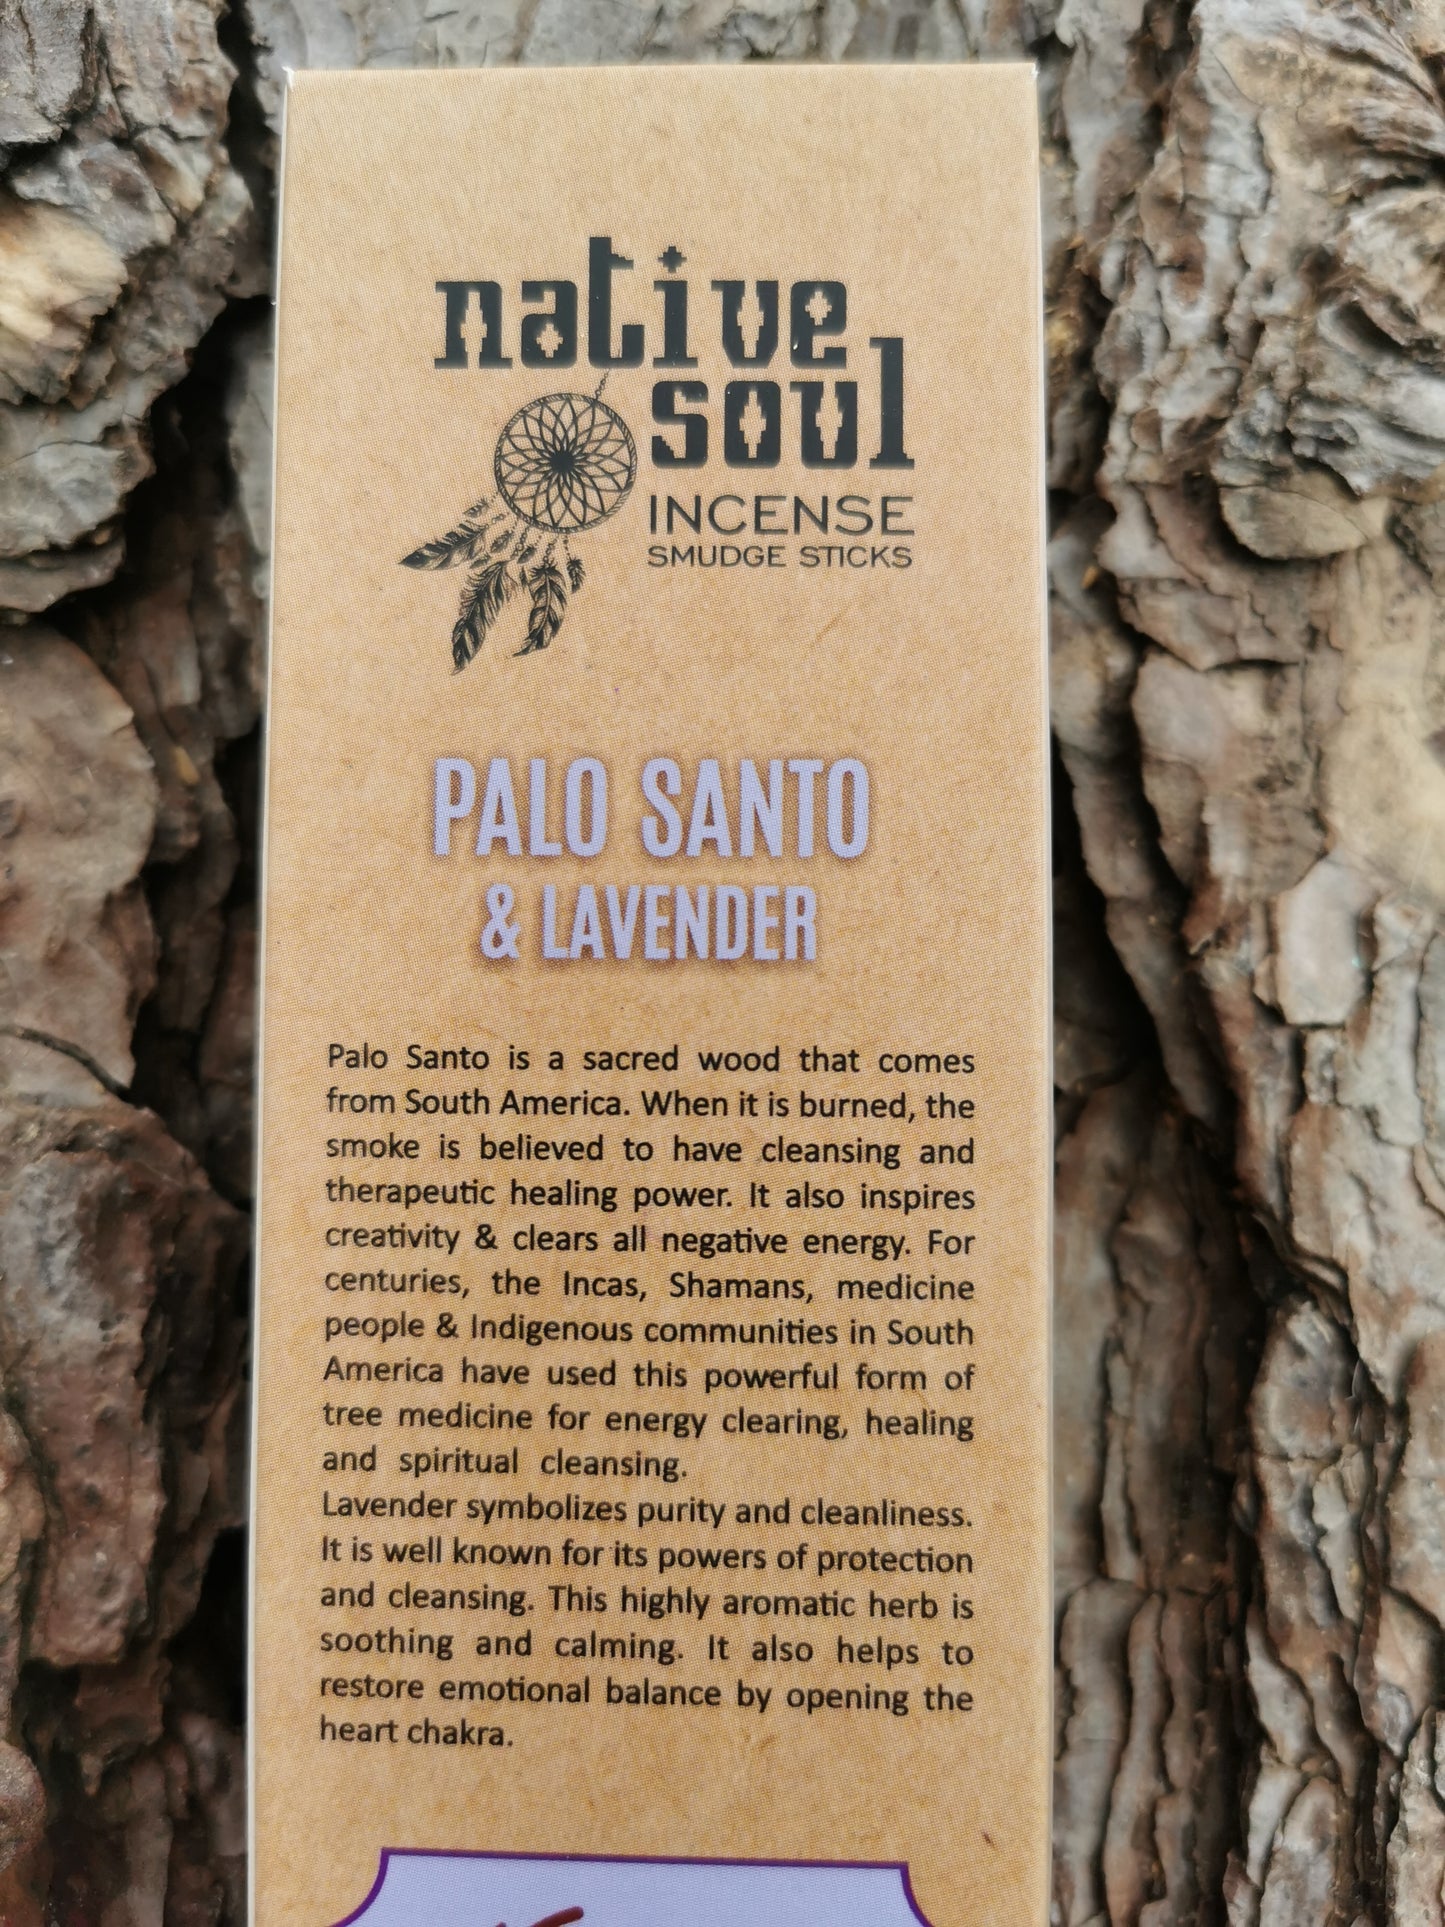 Incense sticks - Native Soul Incense - Palo Santo &amp; Lavender